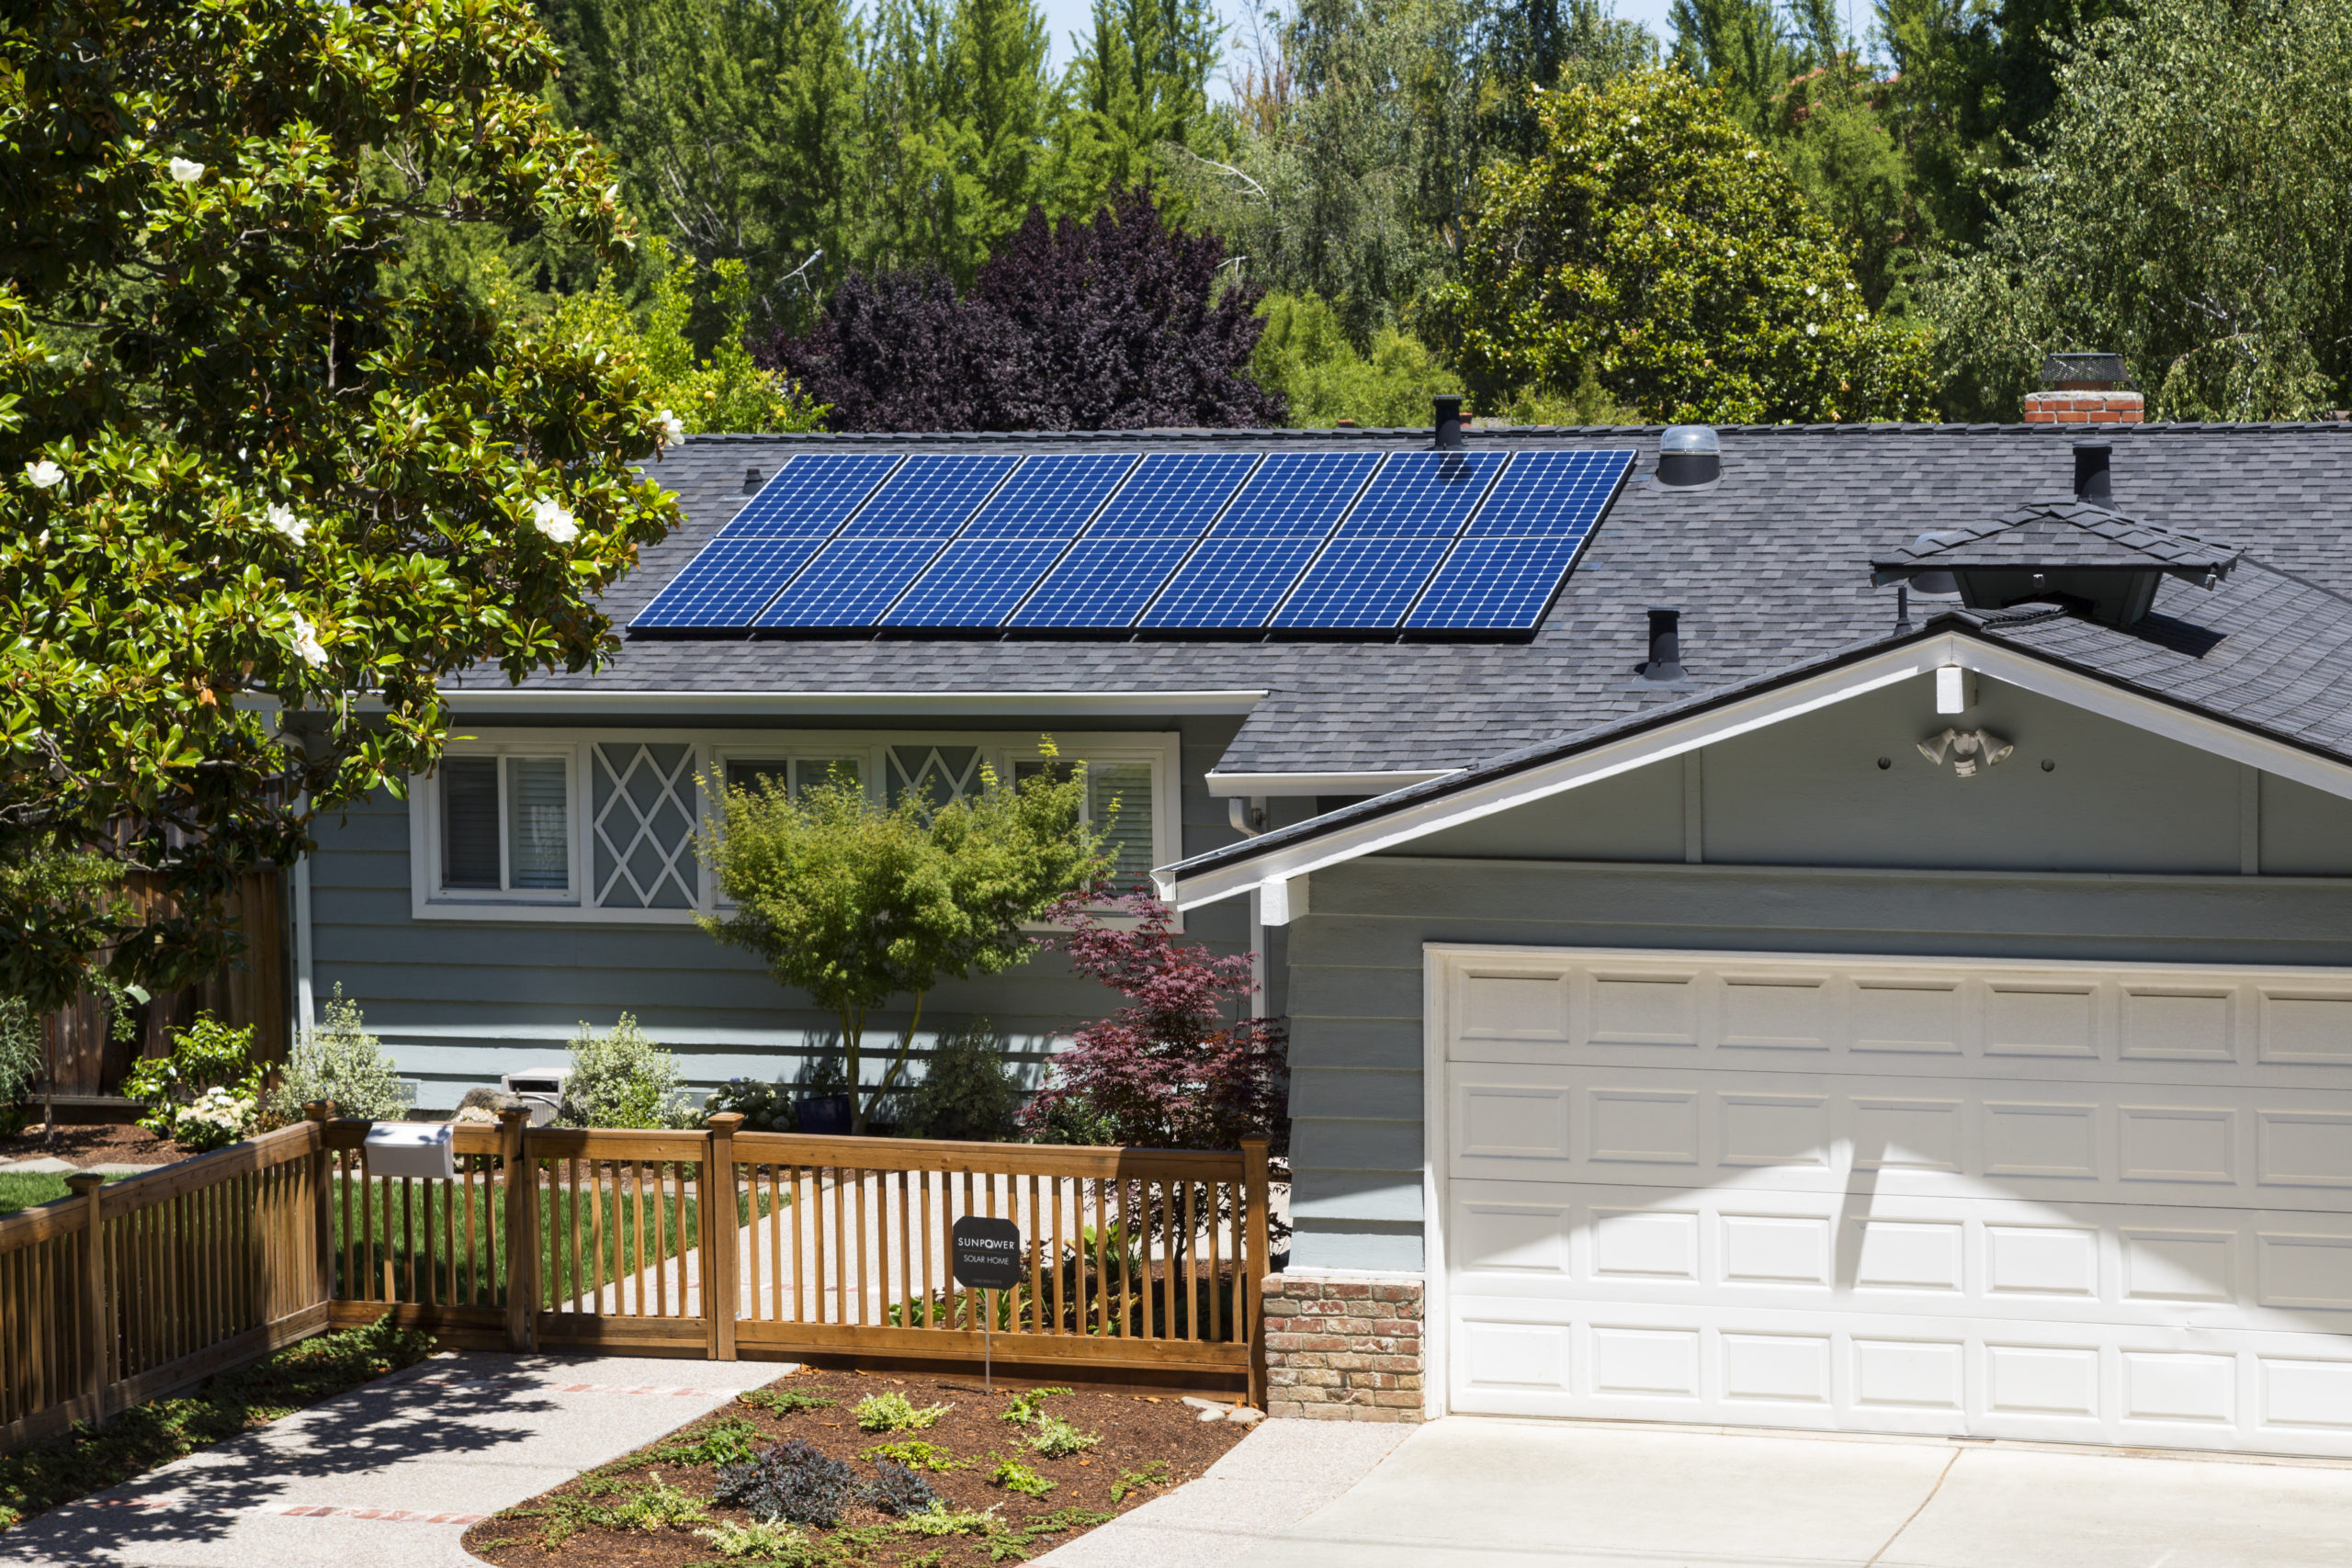 Residential Home Solar Installation